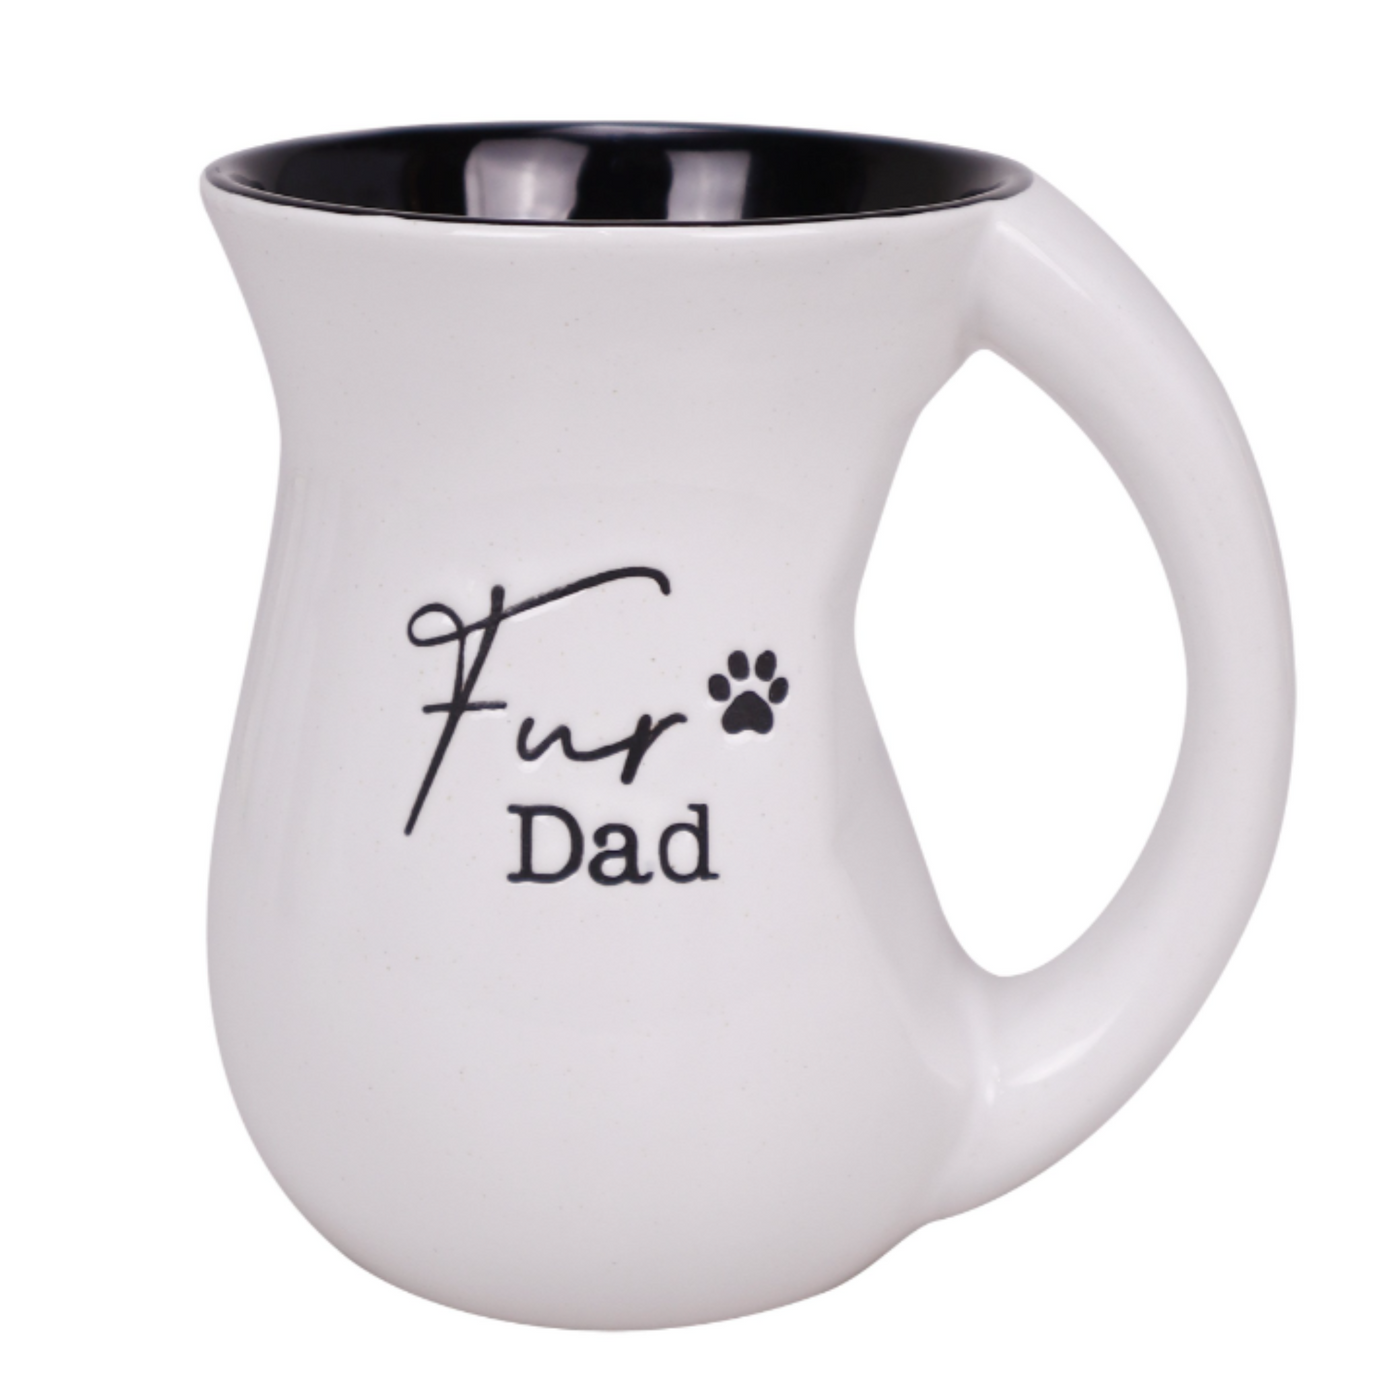 Fur Dad Cozy Mug